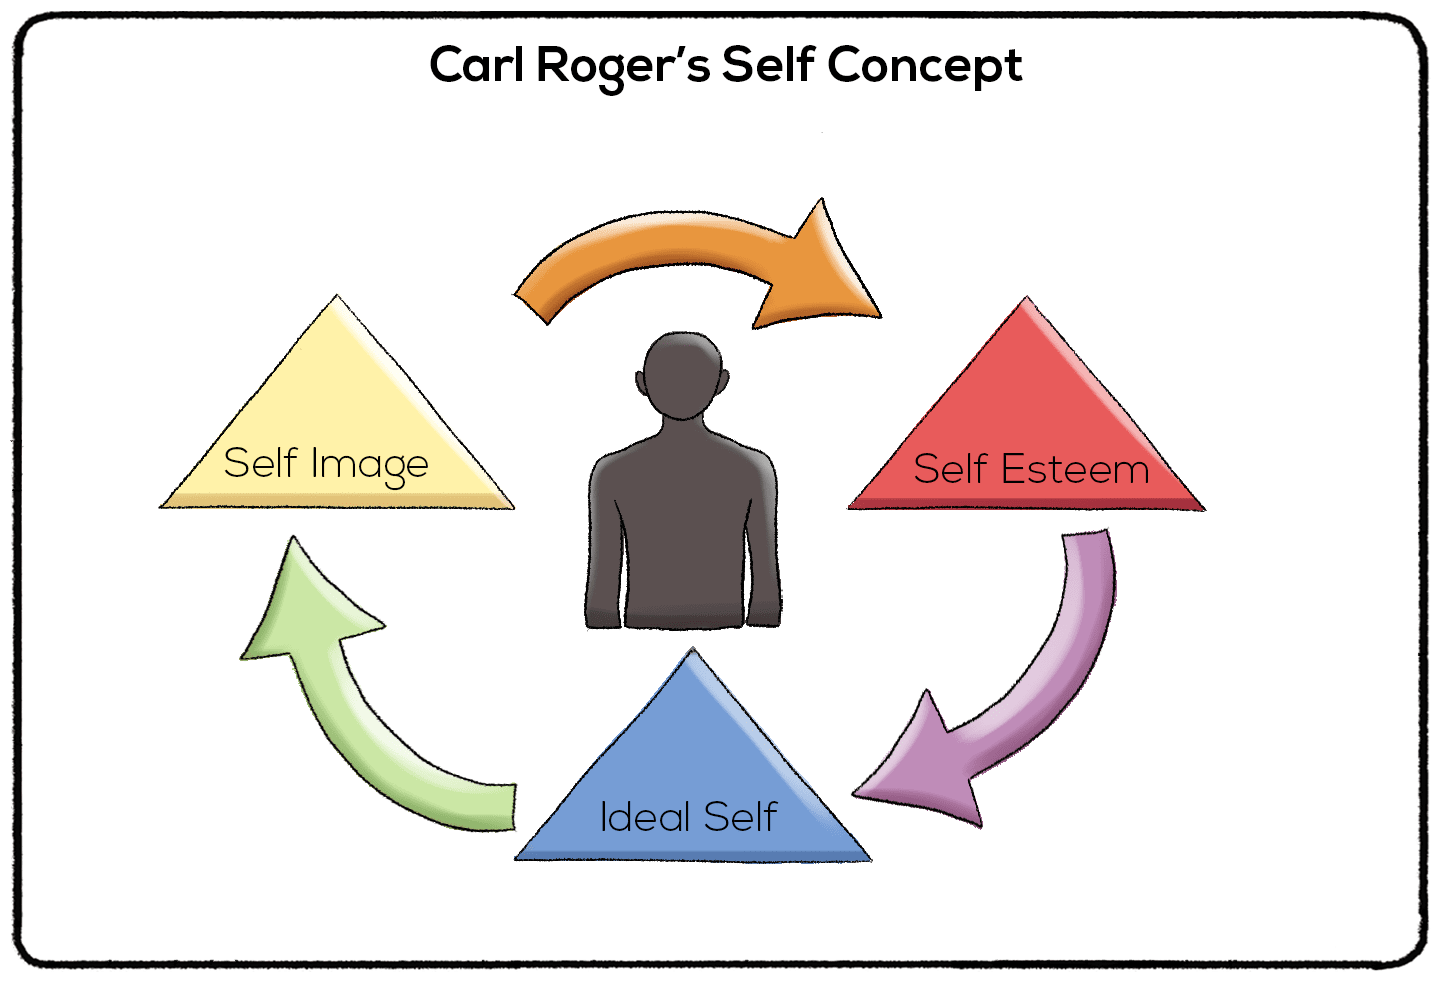 carl roger's self-concept